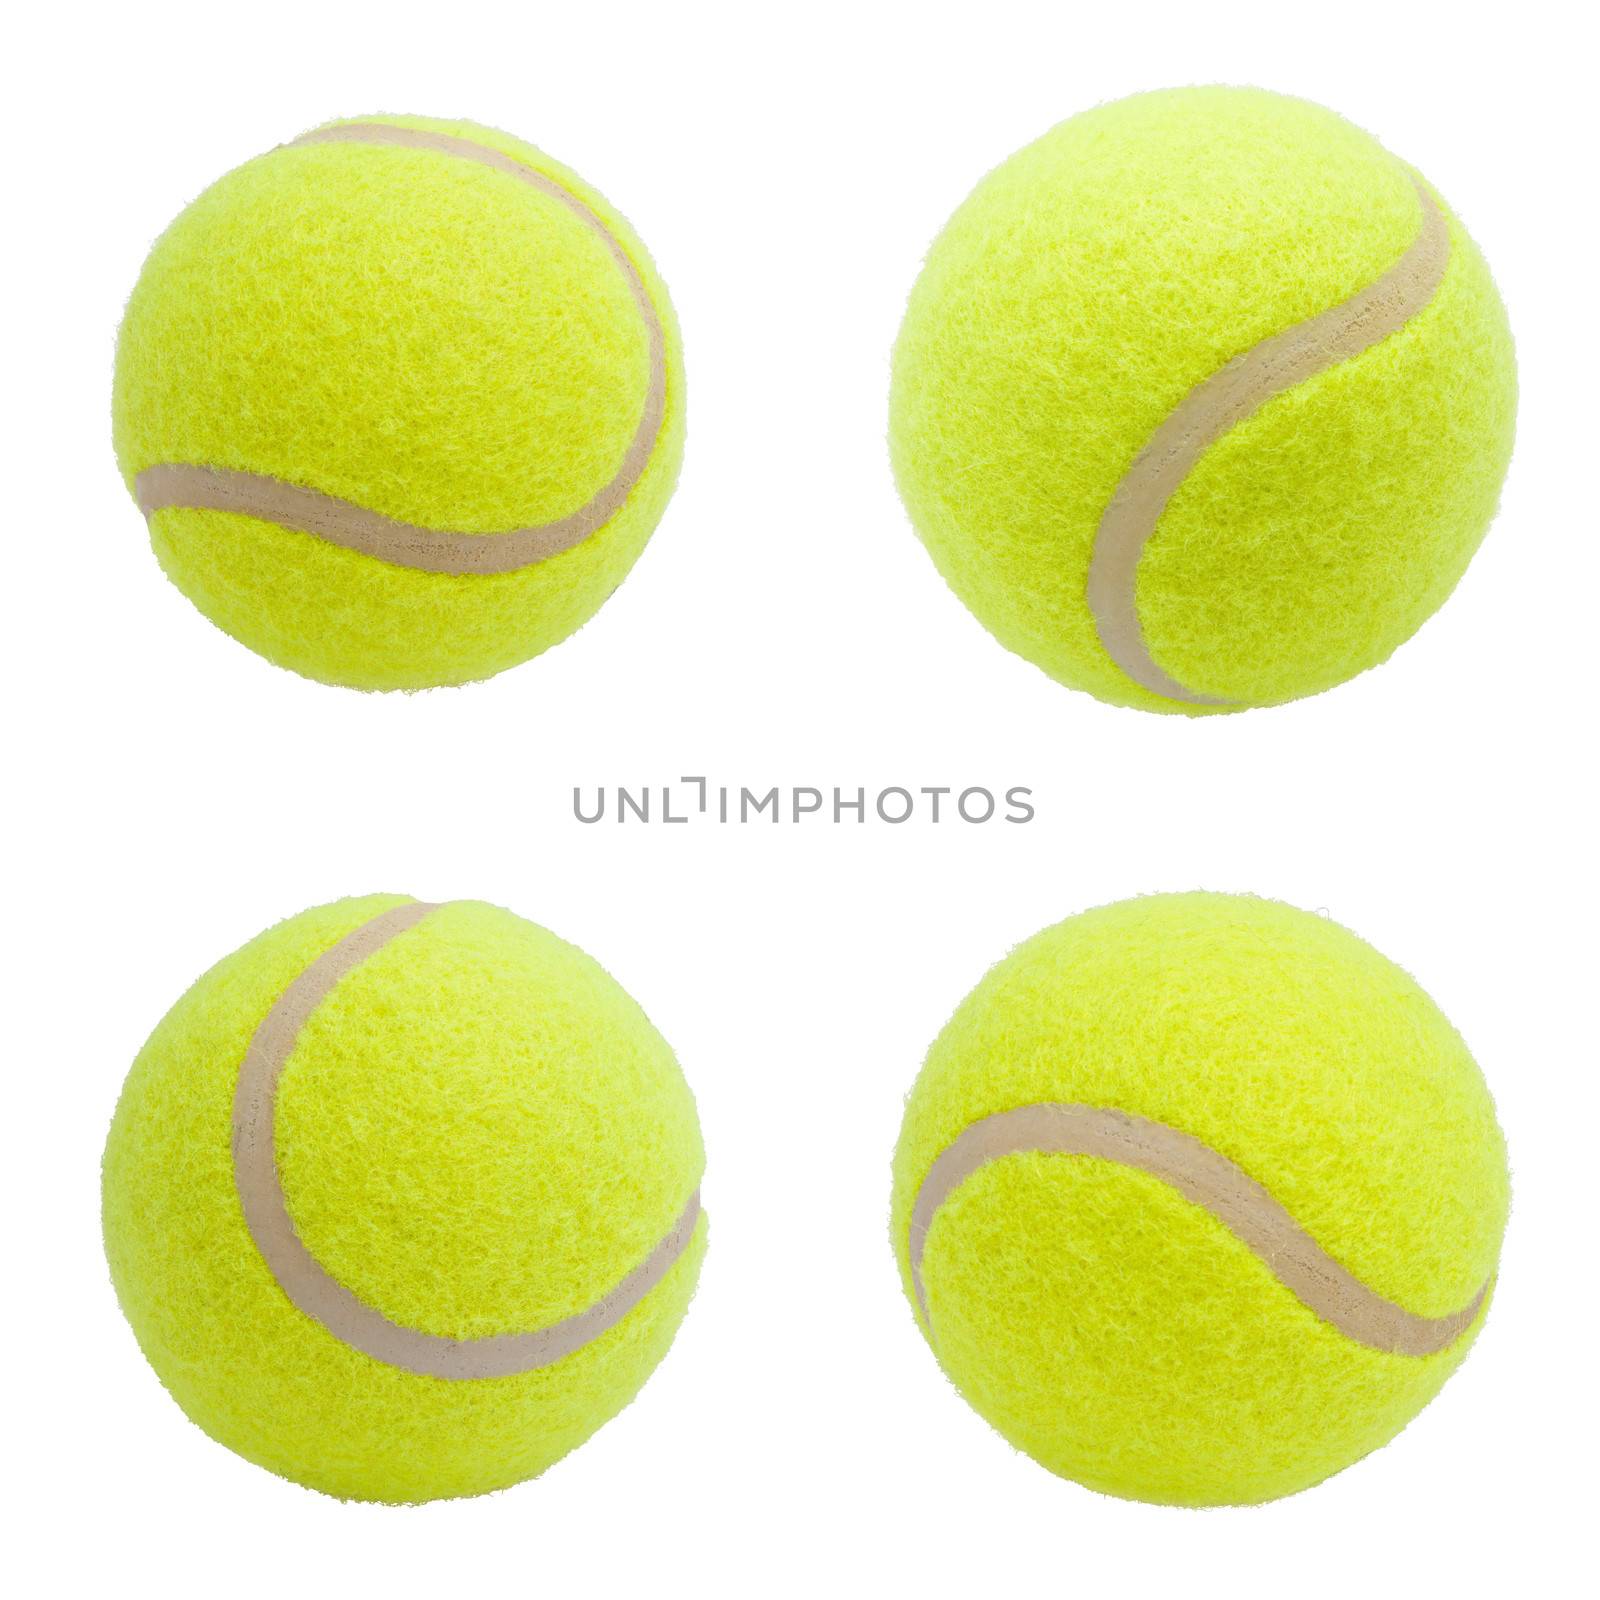 Tennis balls by sailorr